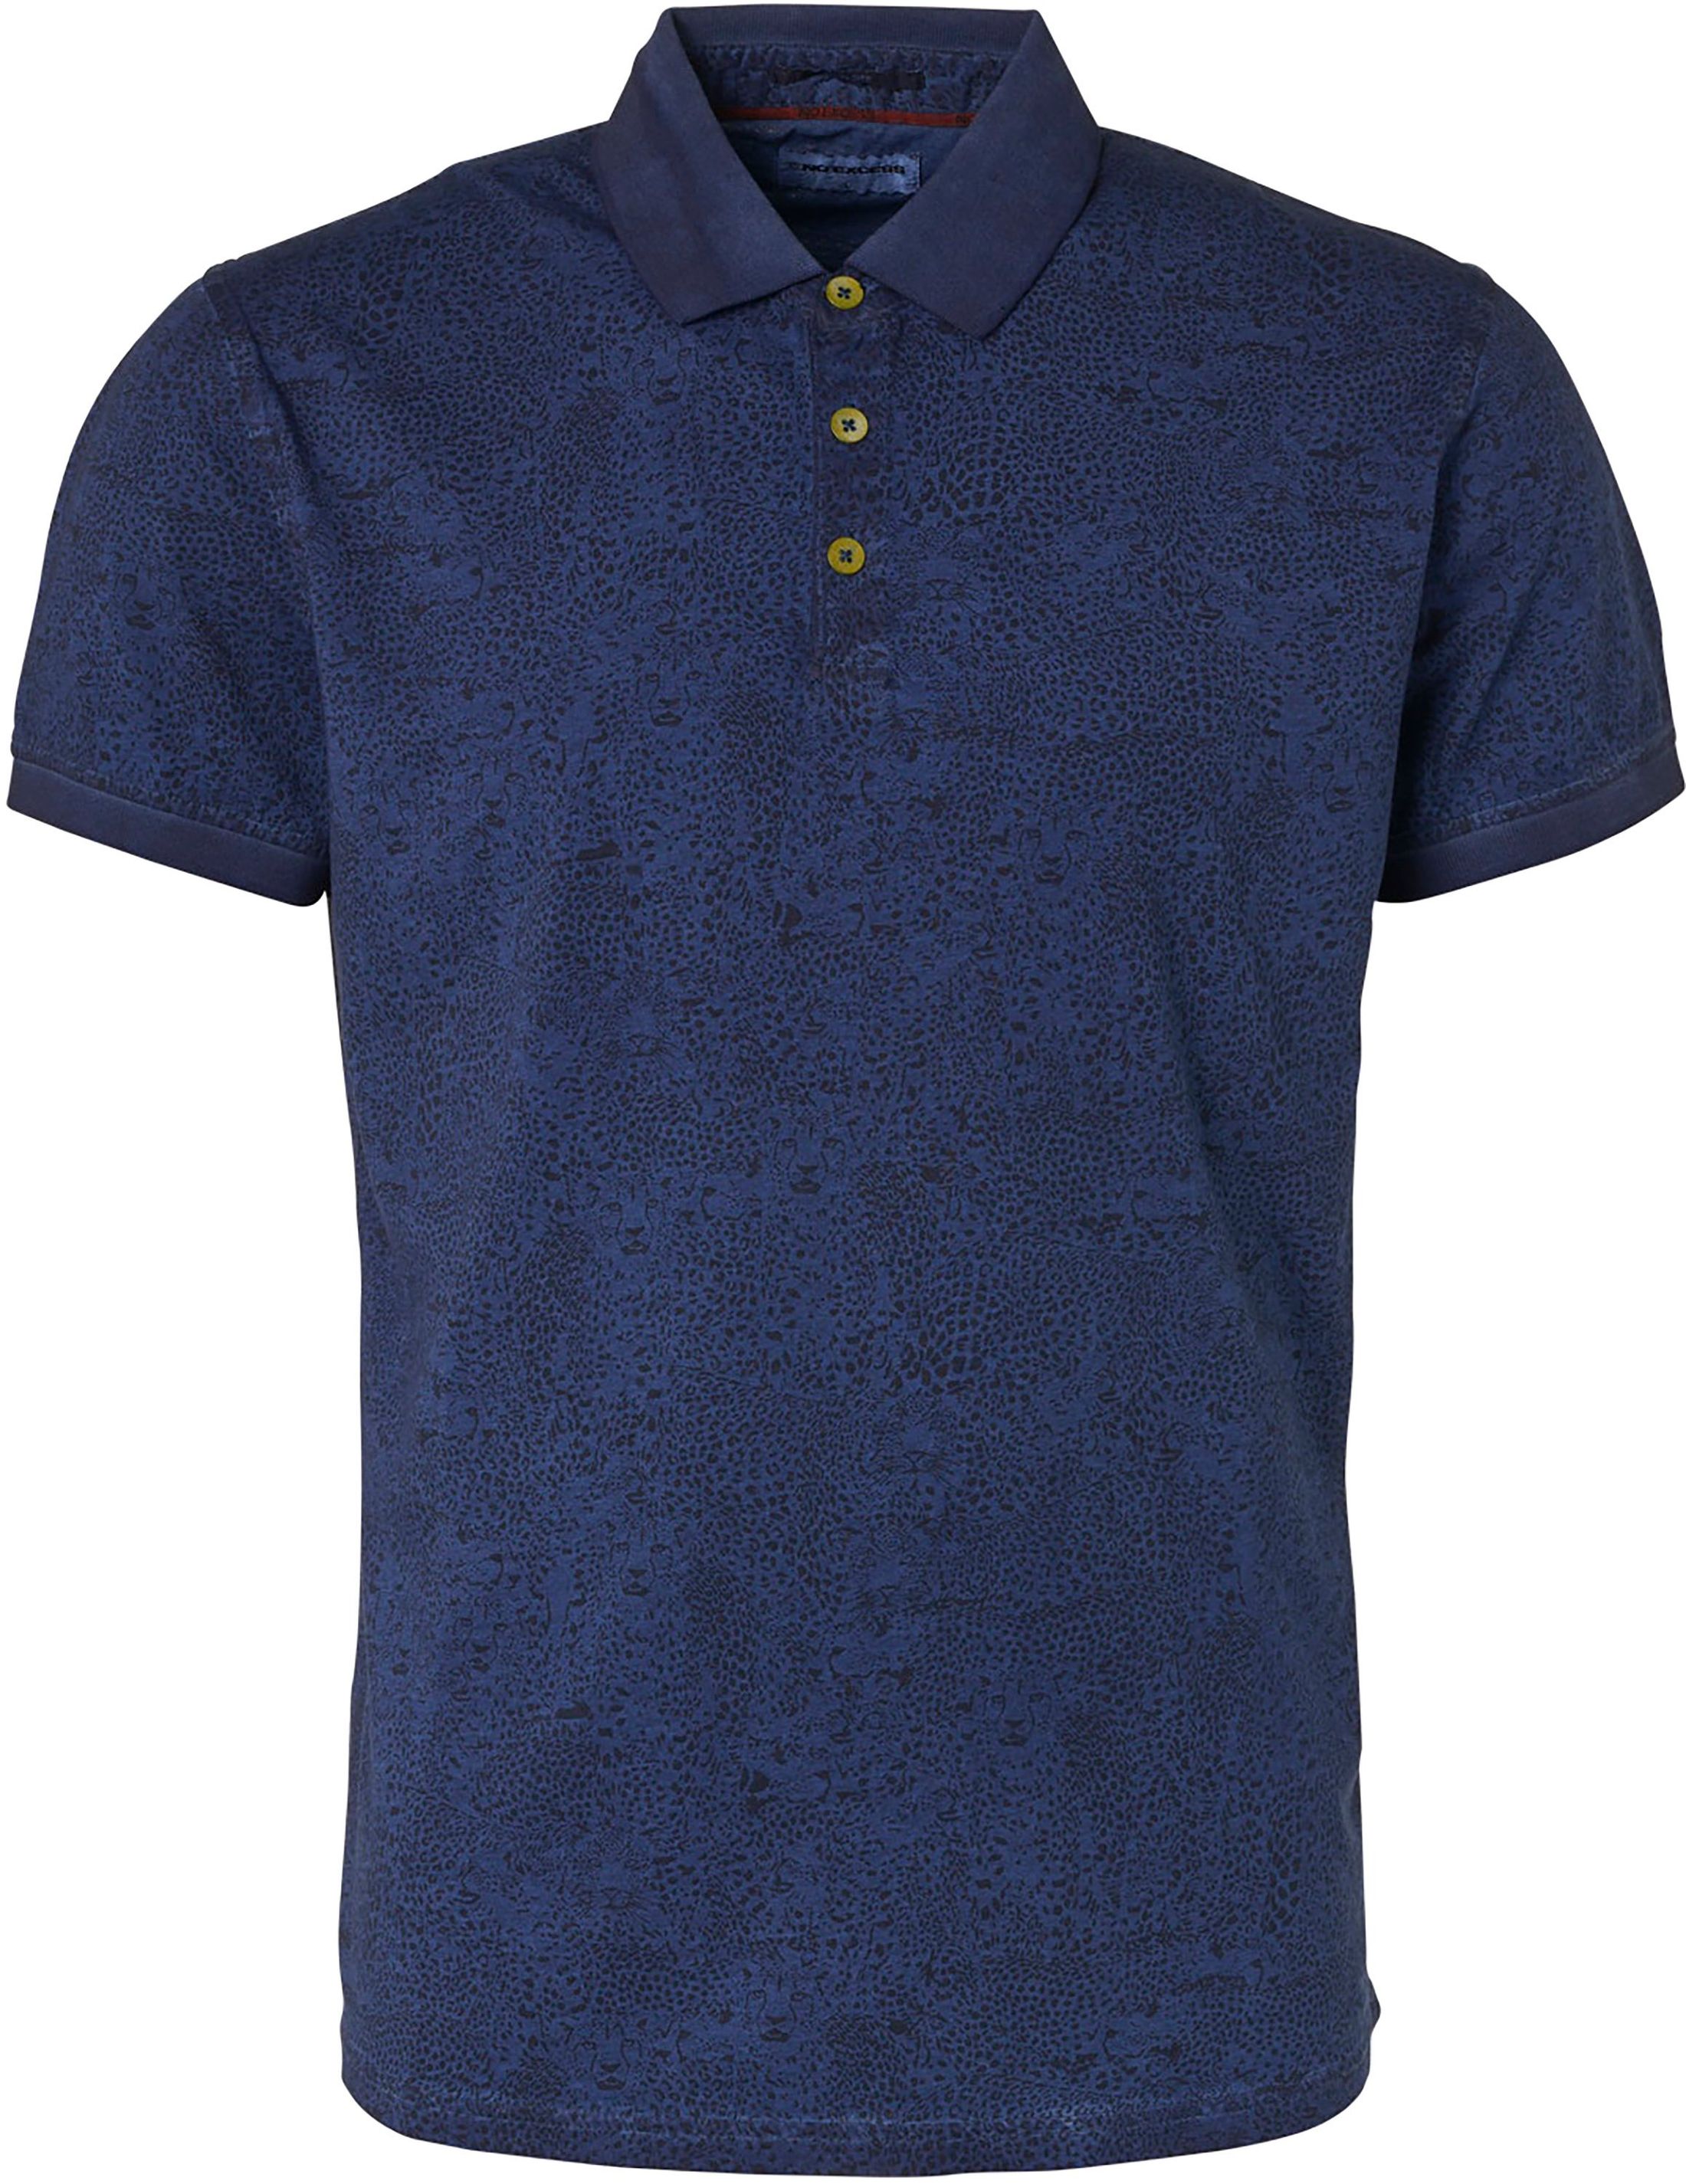 No-Excess Polo Shirt Print Navy Dark Blue Blue size L